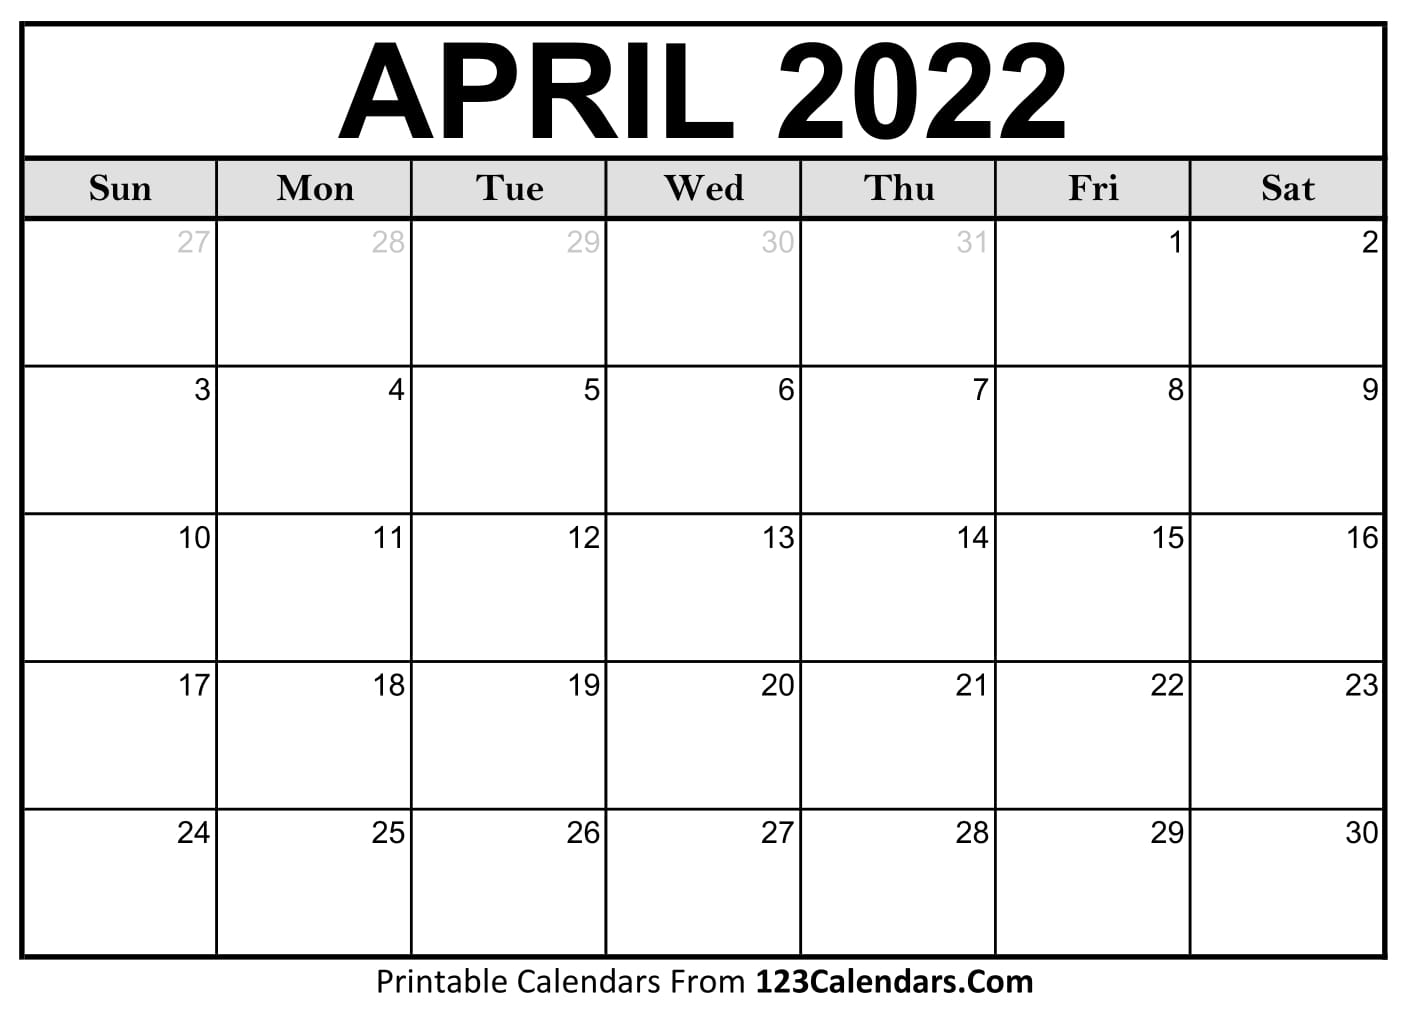 Printable April Calendar 2022 Printable April 2022 Calendar Templates - 123Calendars.com